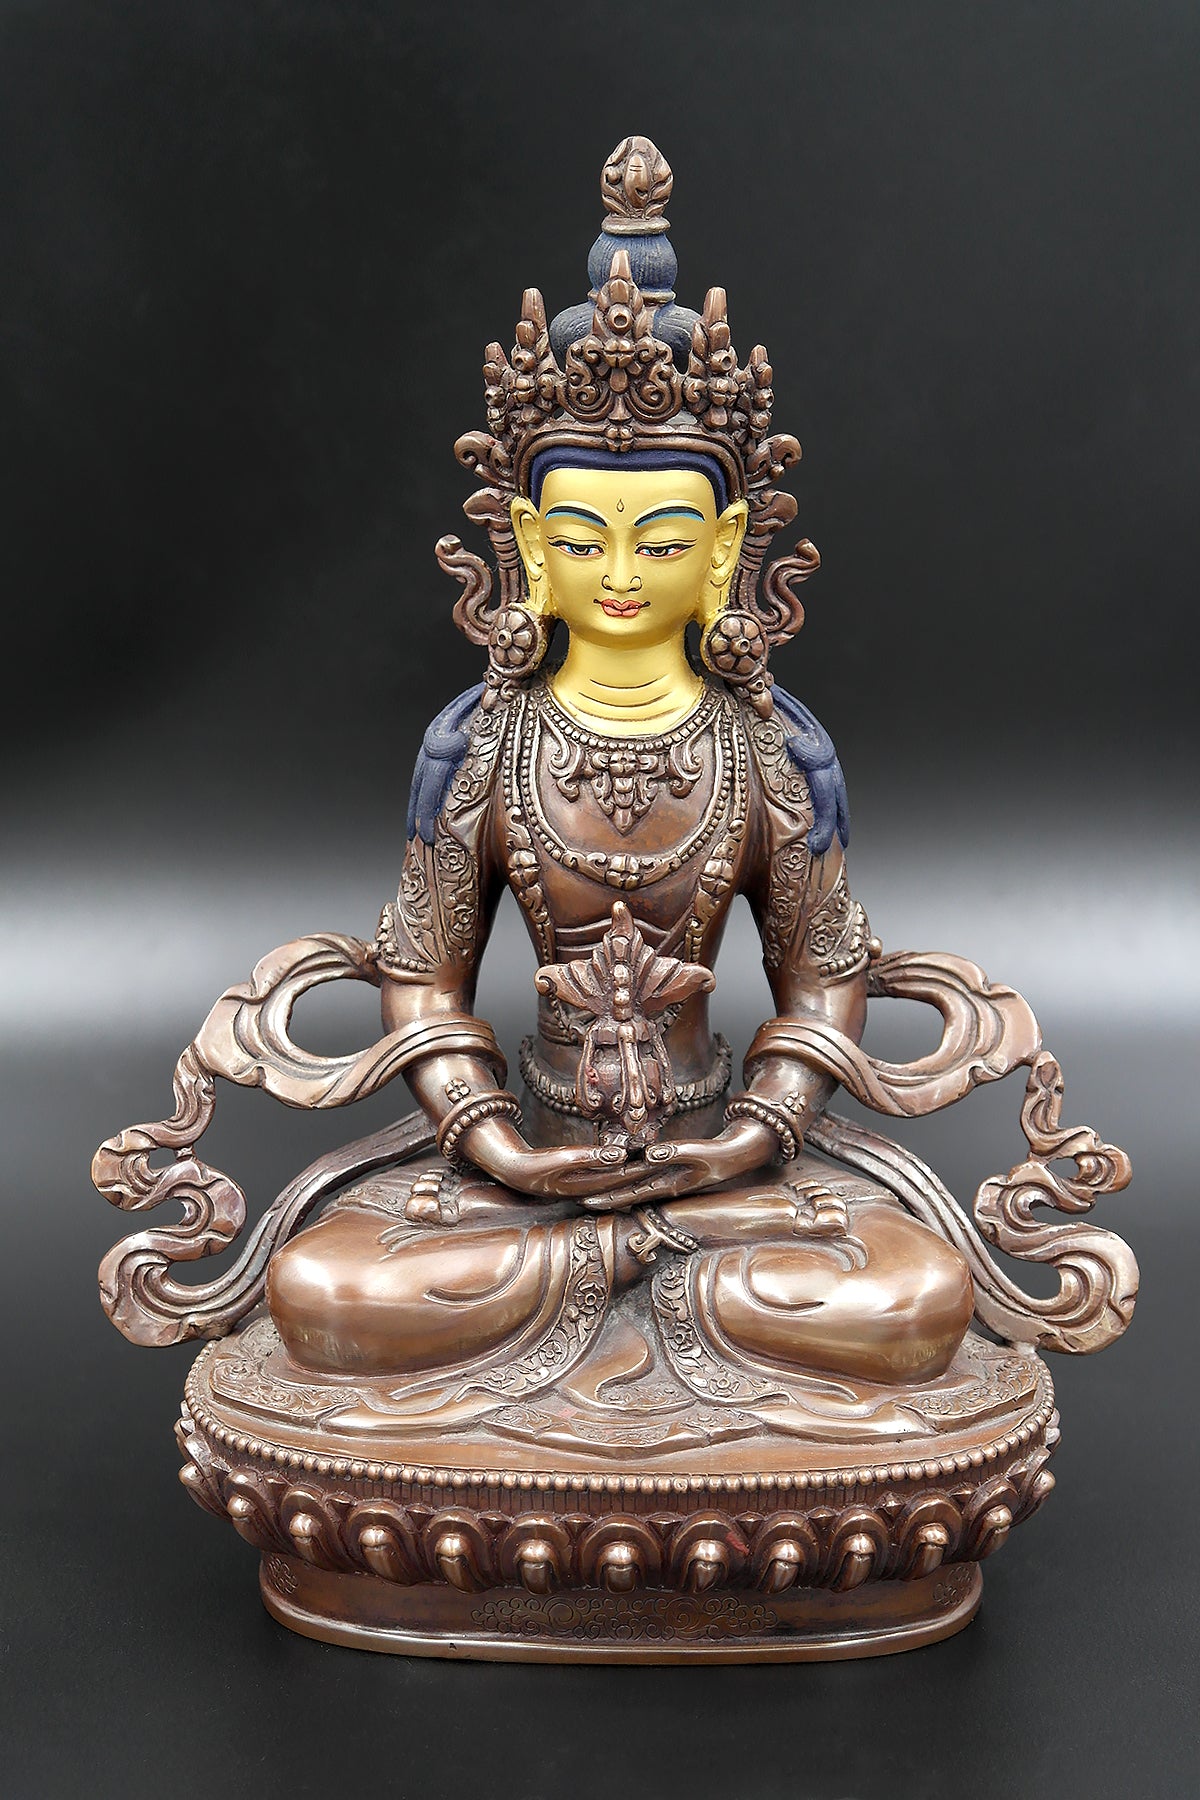 Copper Oxidized Buddhist Aparmita or Amitayus Statue 8"